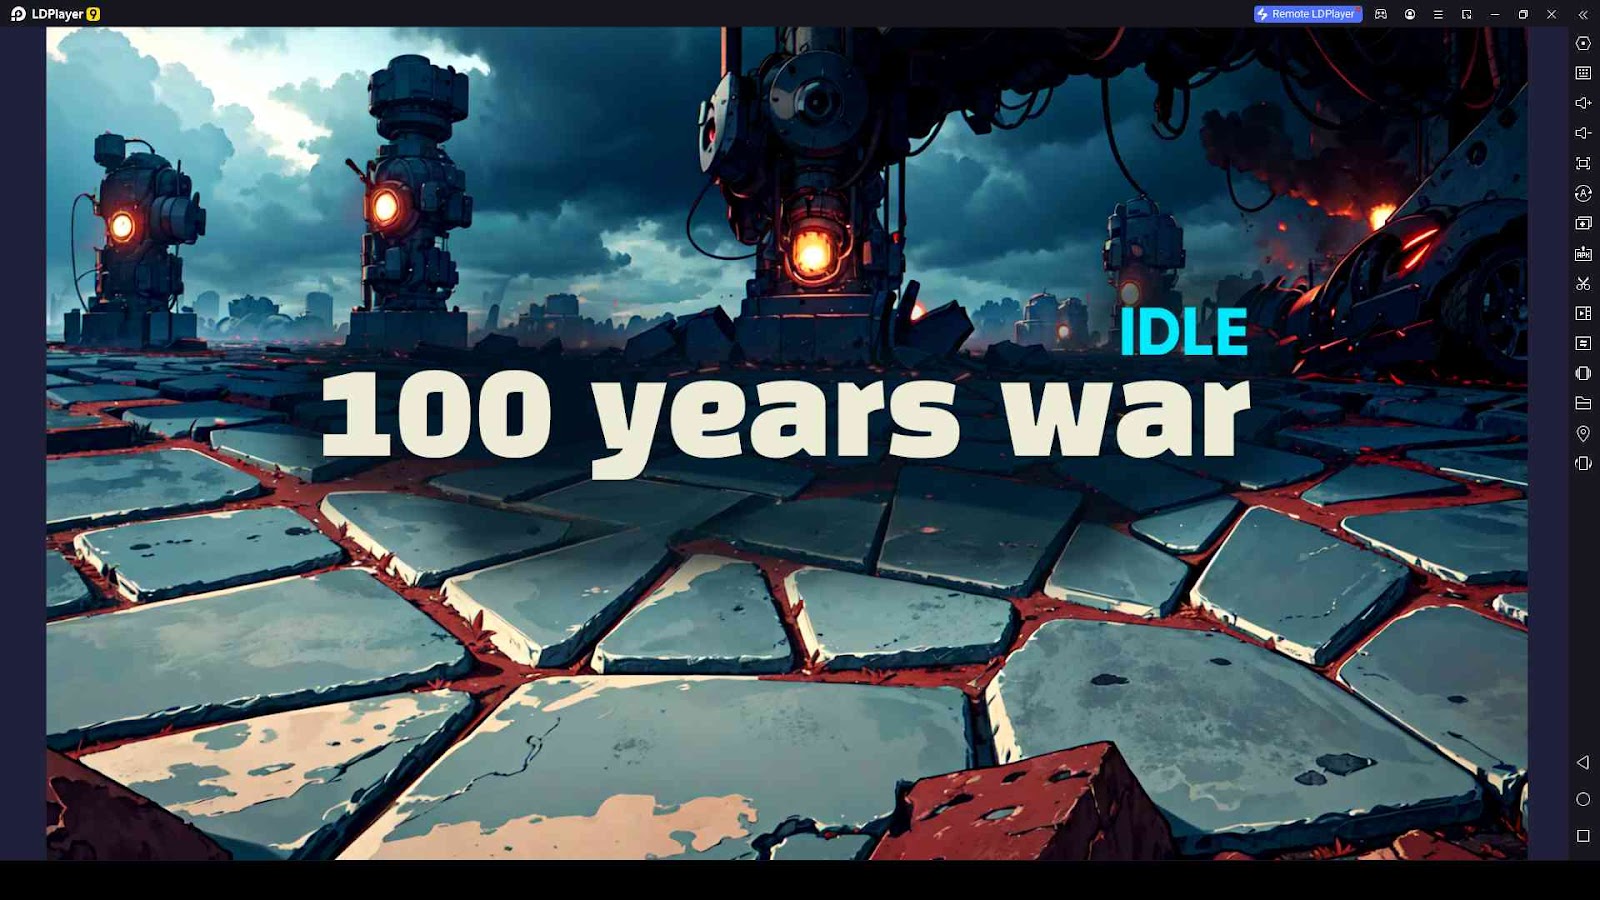 100 Years War - Idle Codes